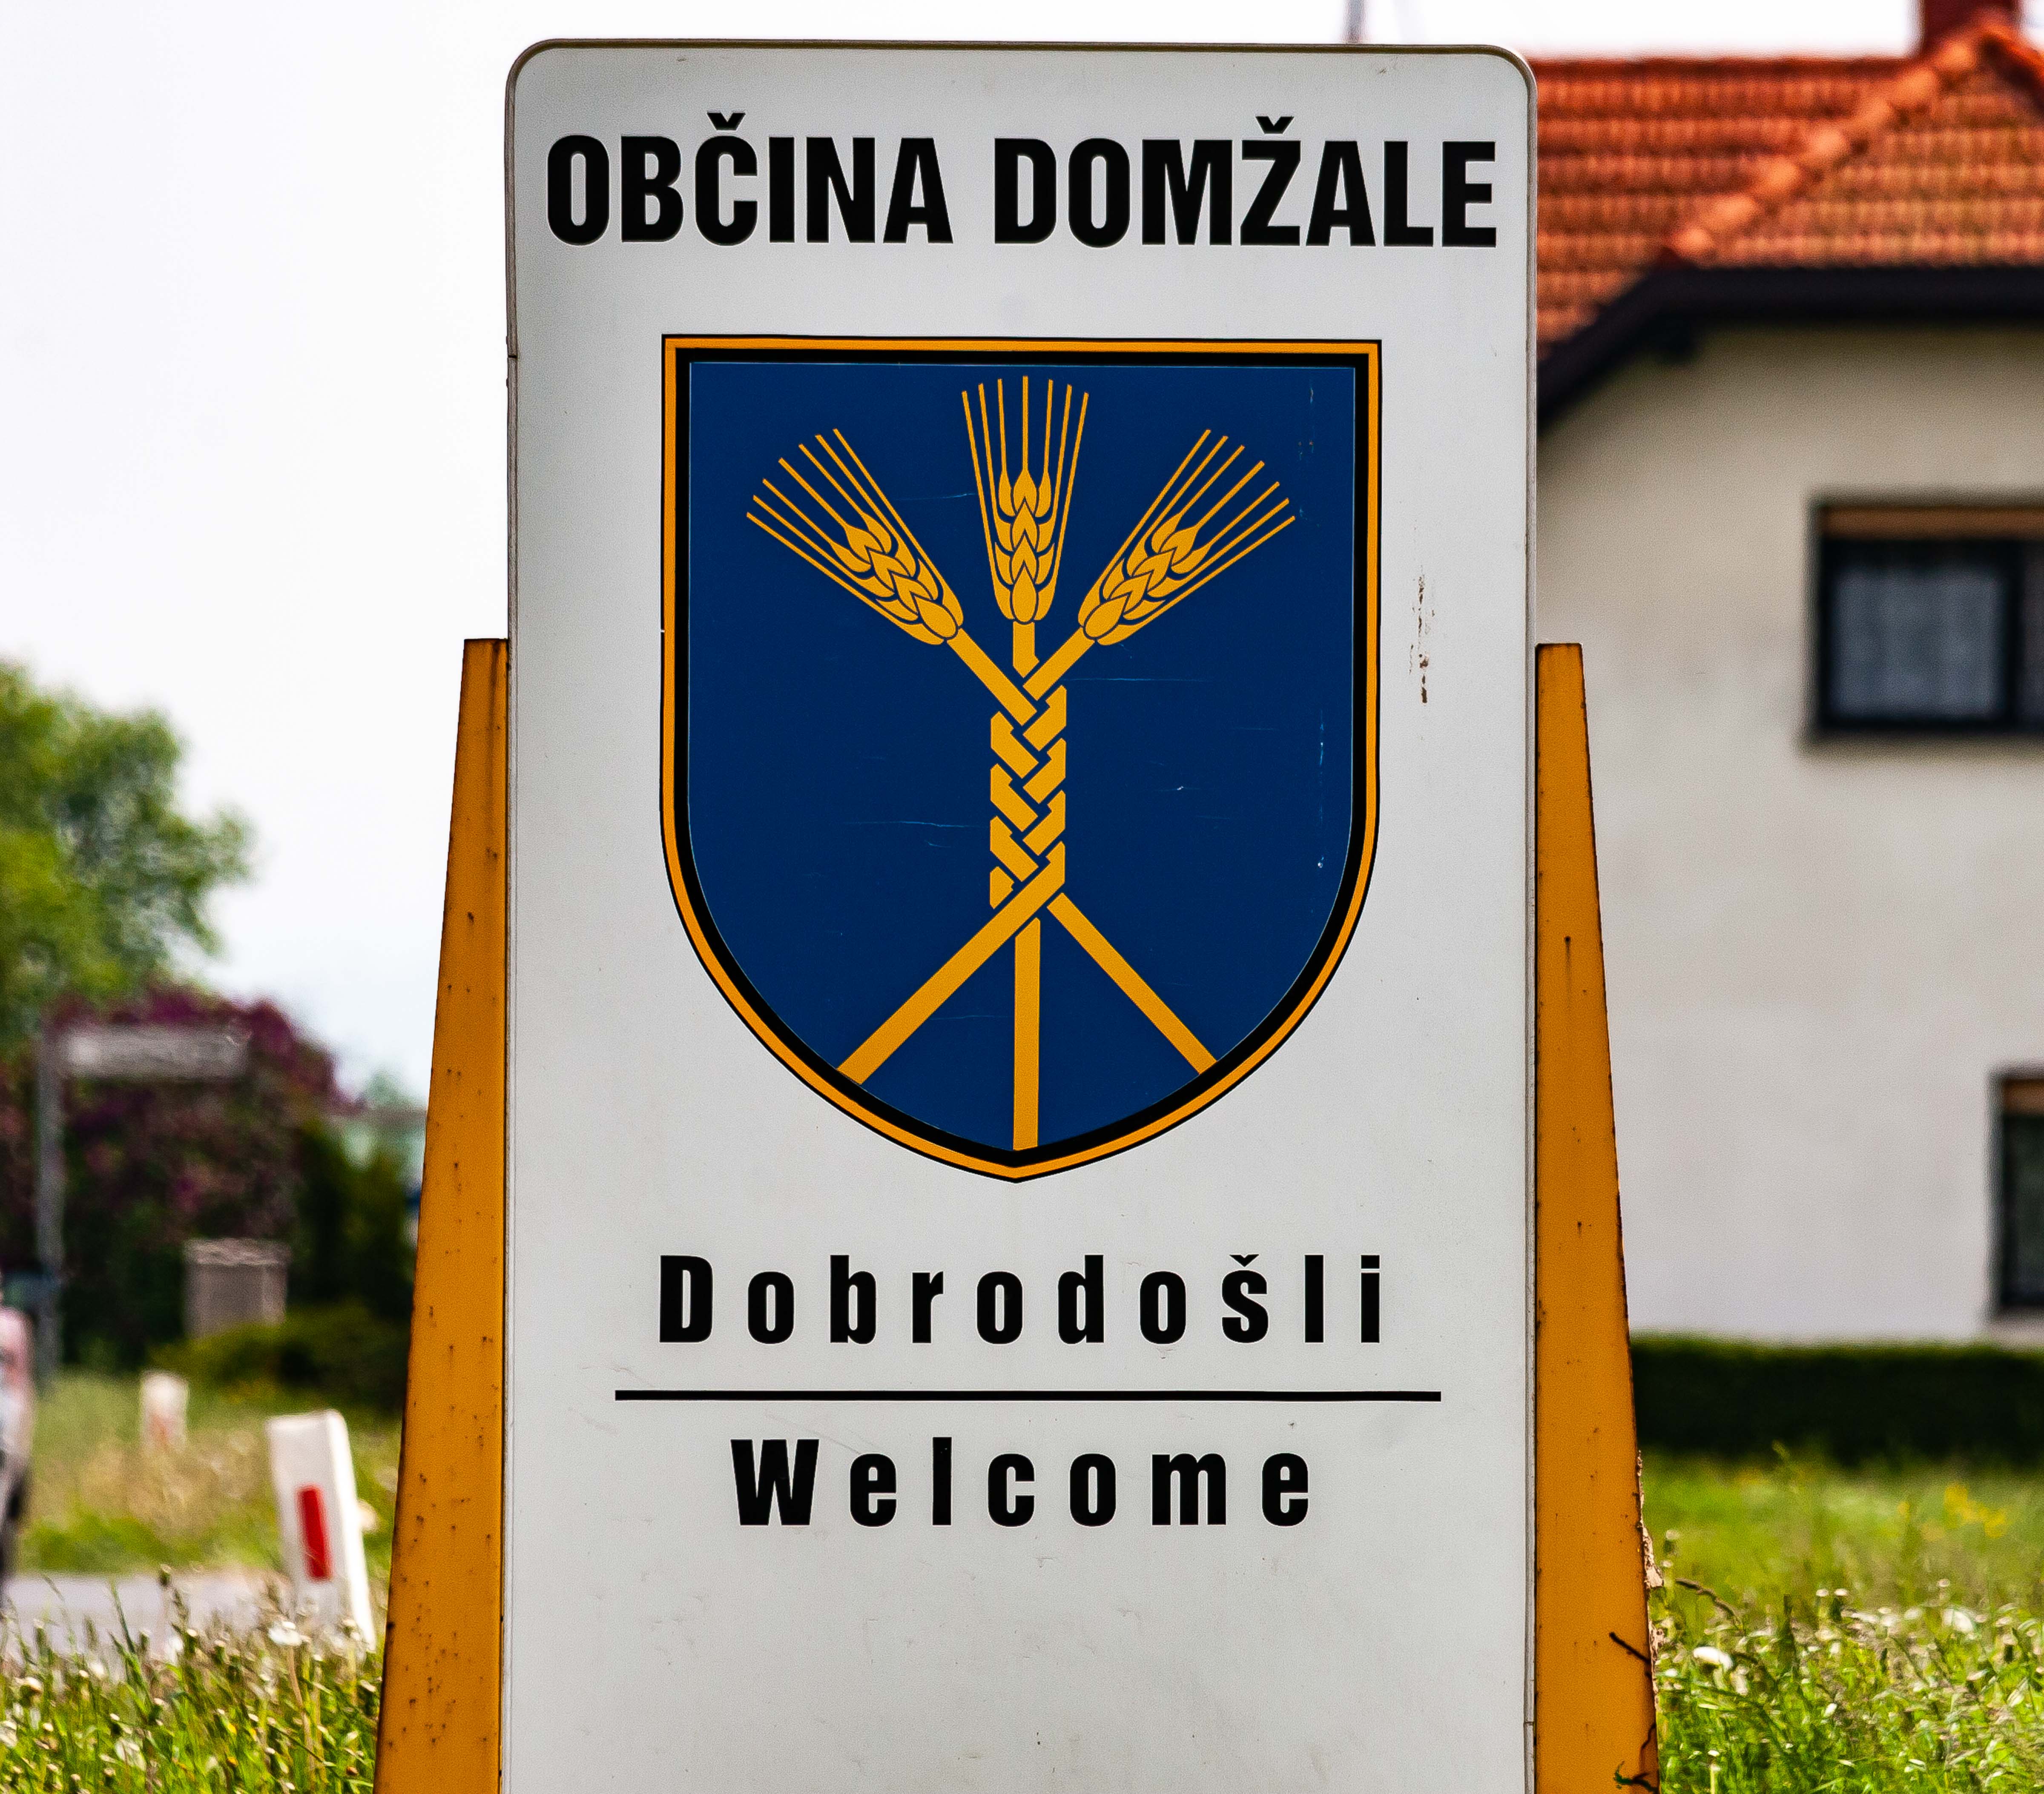 Slovenia, Domzale Prov, Welcome To Domzale Obcina, 2006, IMG 6067